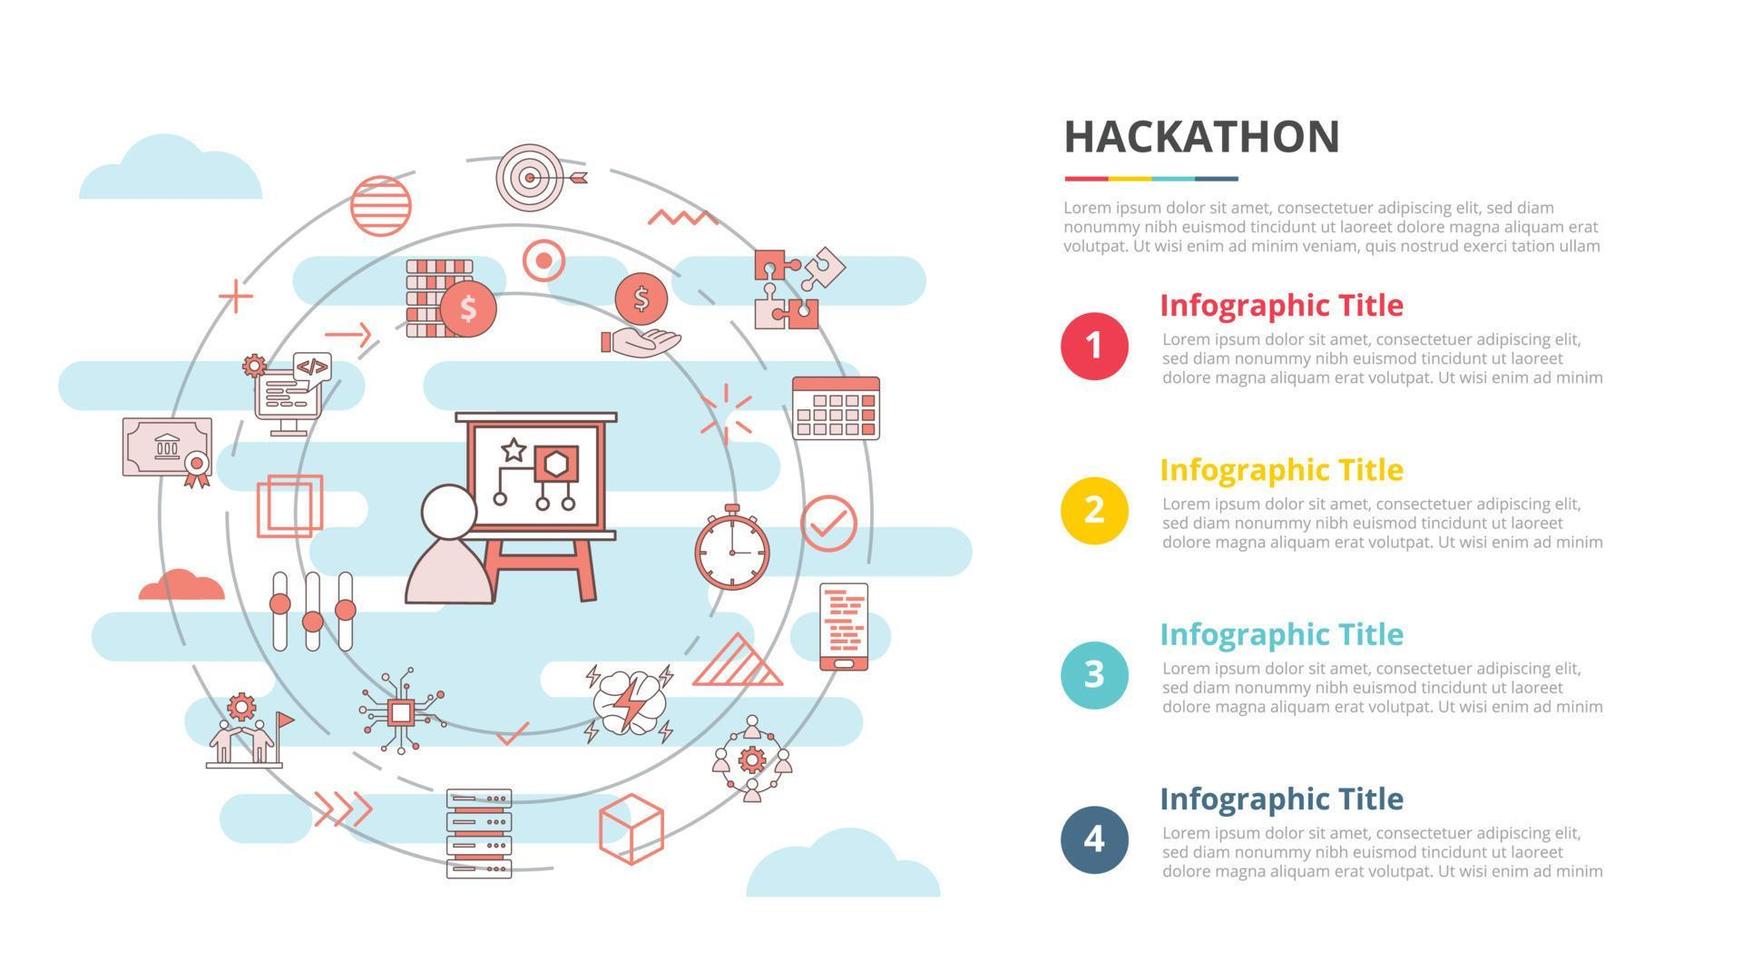 concepto de hackathon para banner de plantilla infográfica con información de lista de cuatro puntos vector